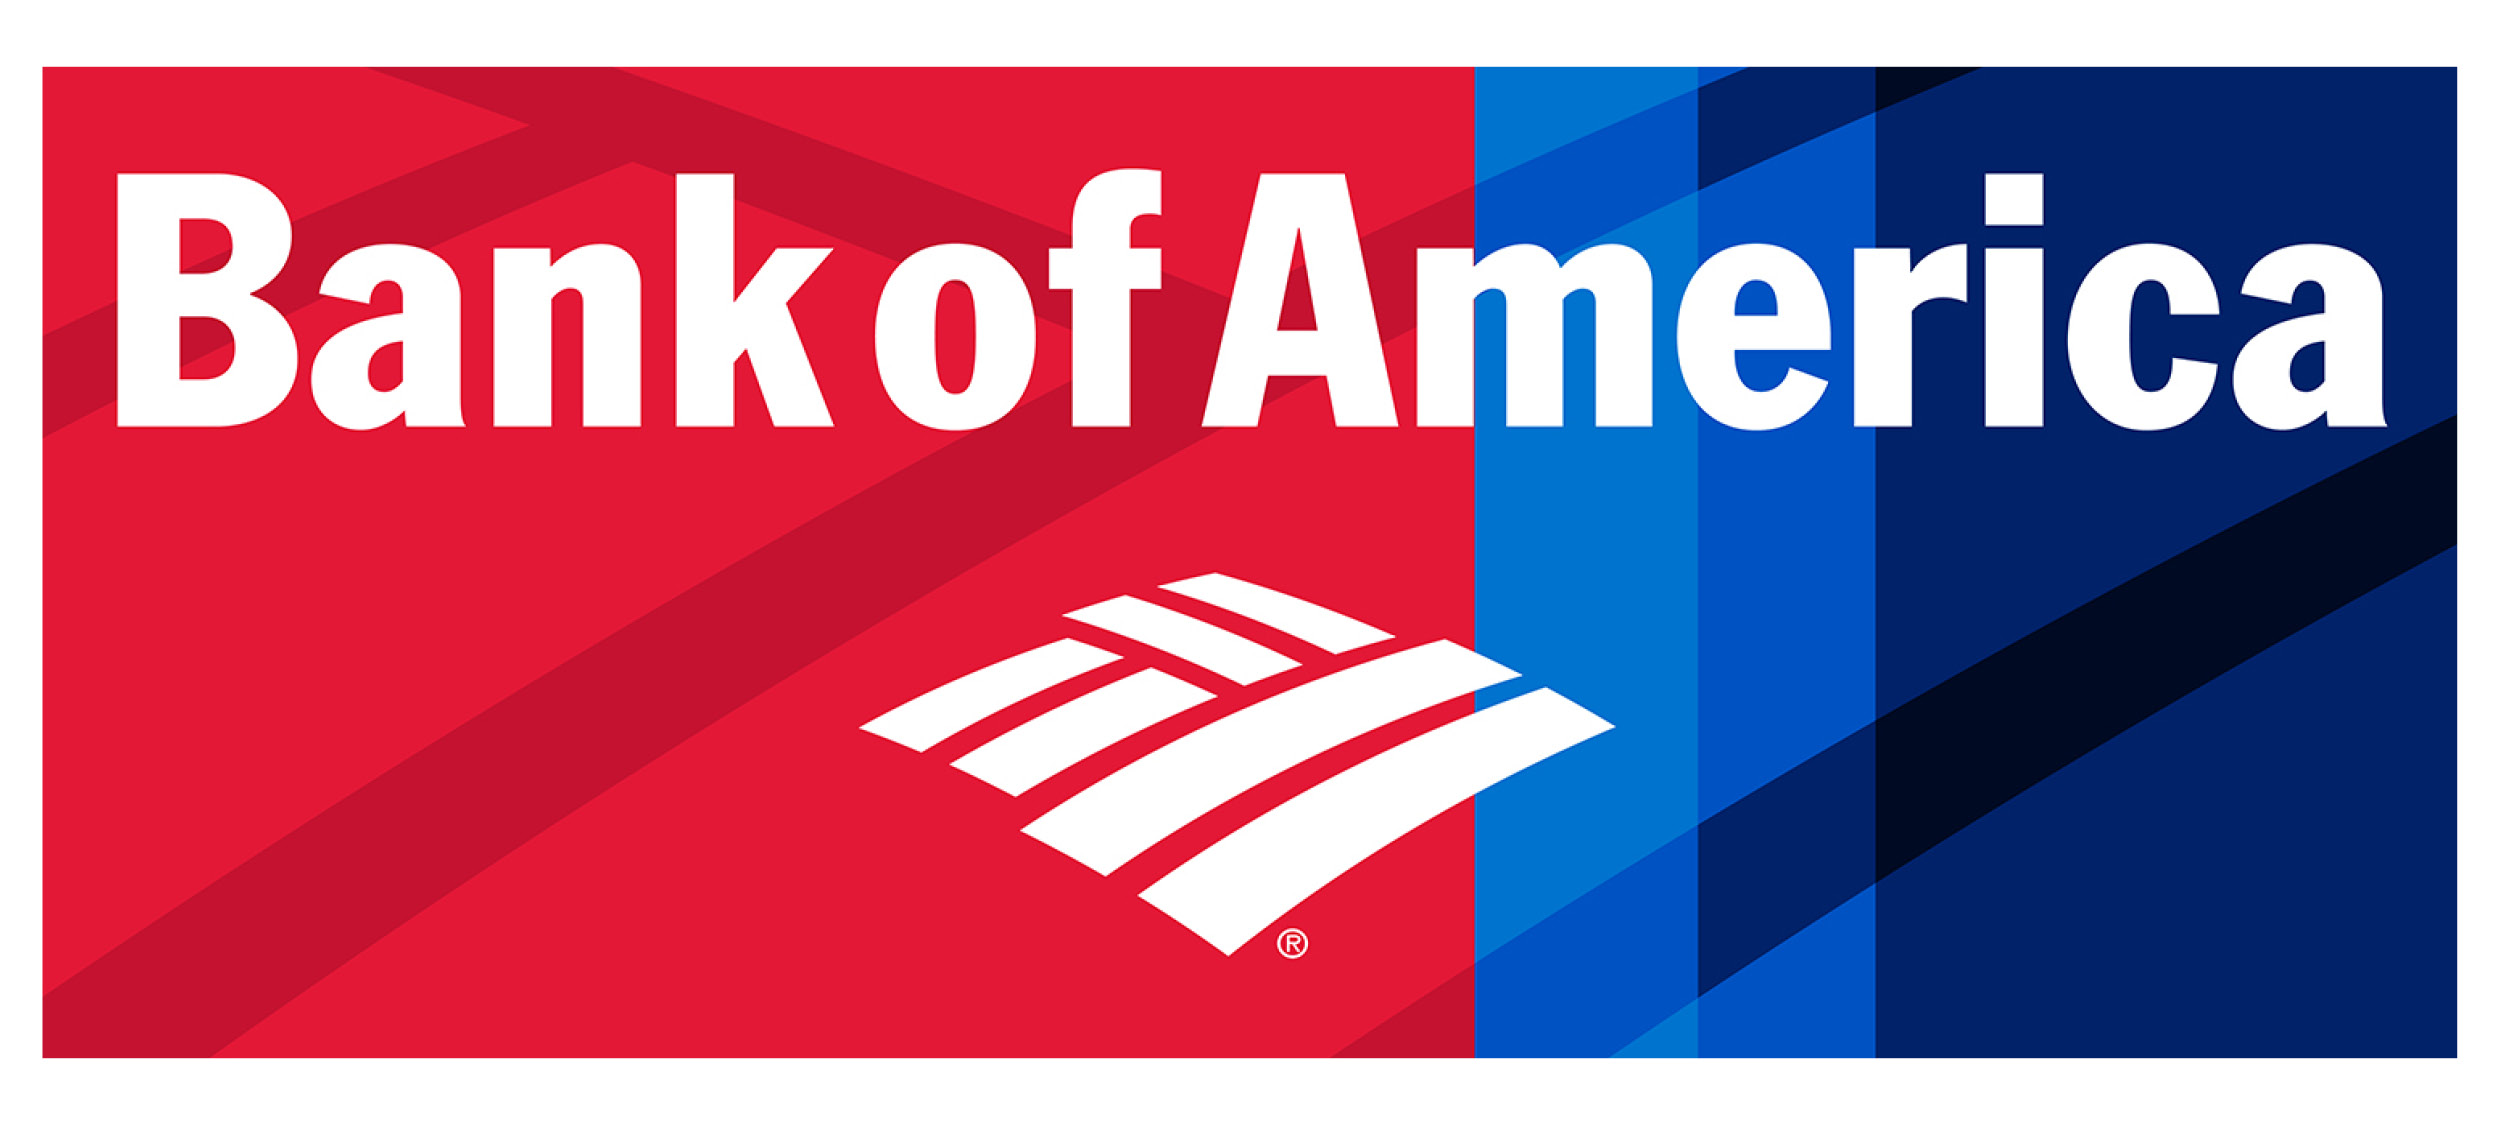 Bank of America. Банк Америки Bank of America. Банк оф Америка лого. Логотип банка банк оф Америка. Bank of america en